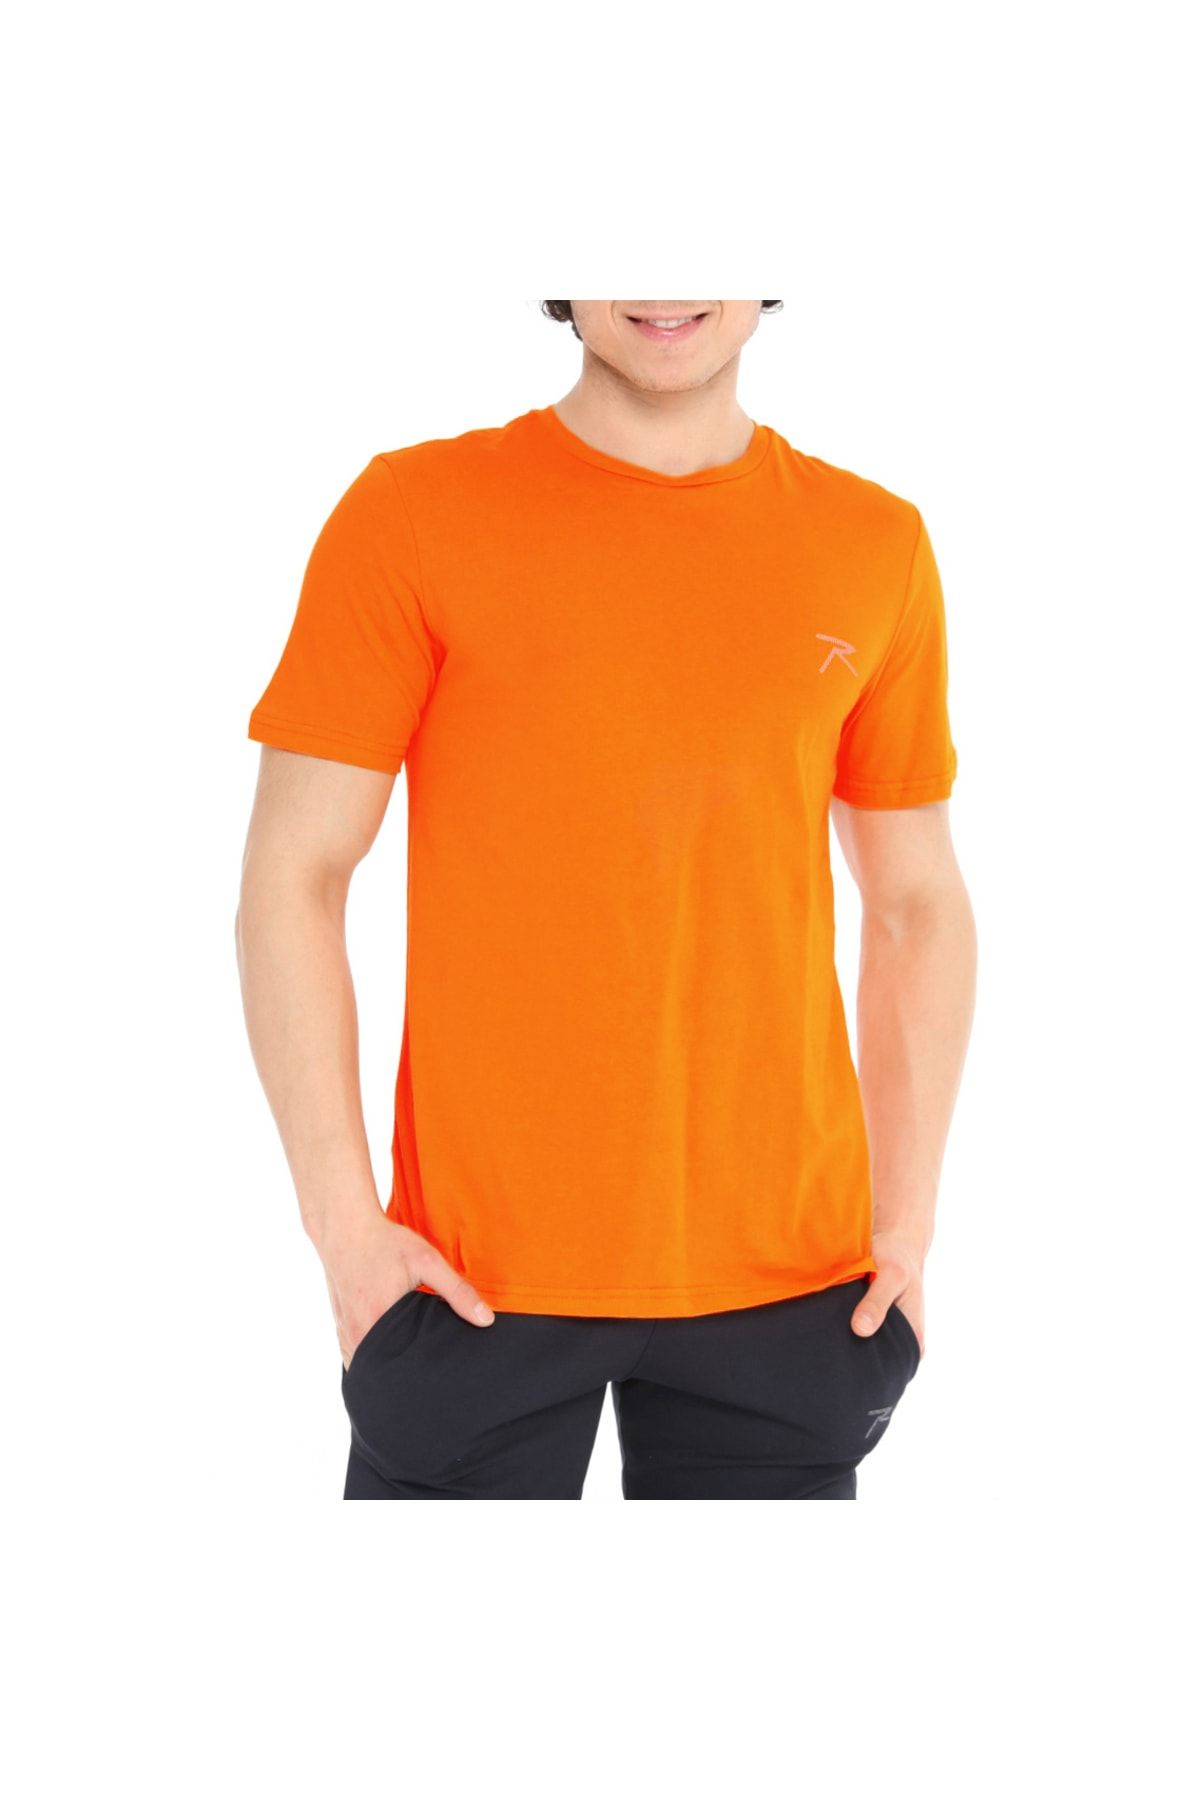 raru Erkek %100 Pamuk T-shirt Gravıs Oranj